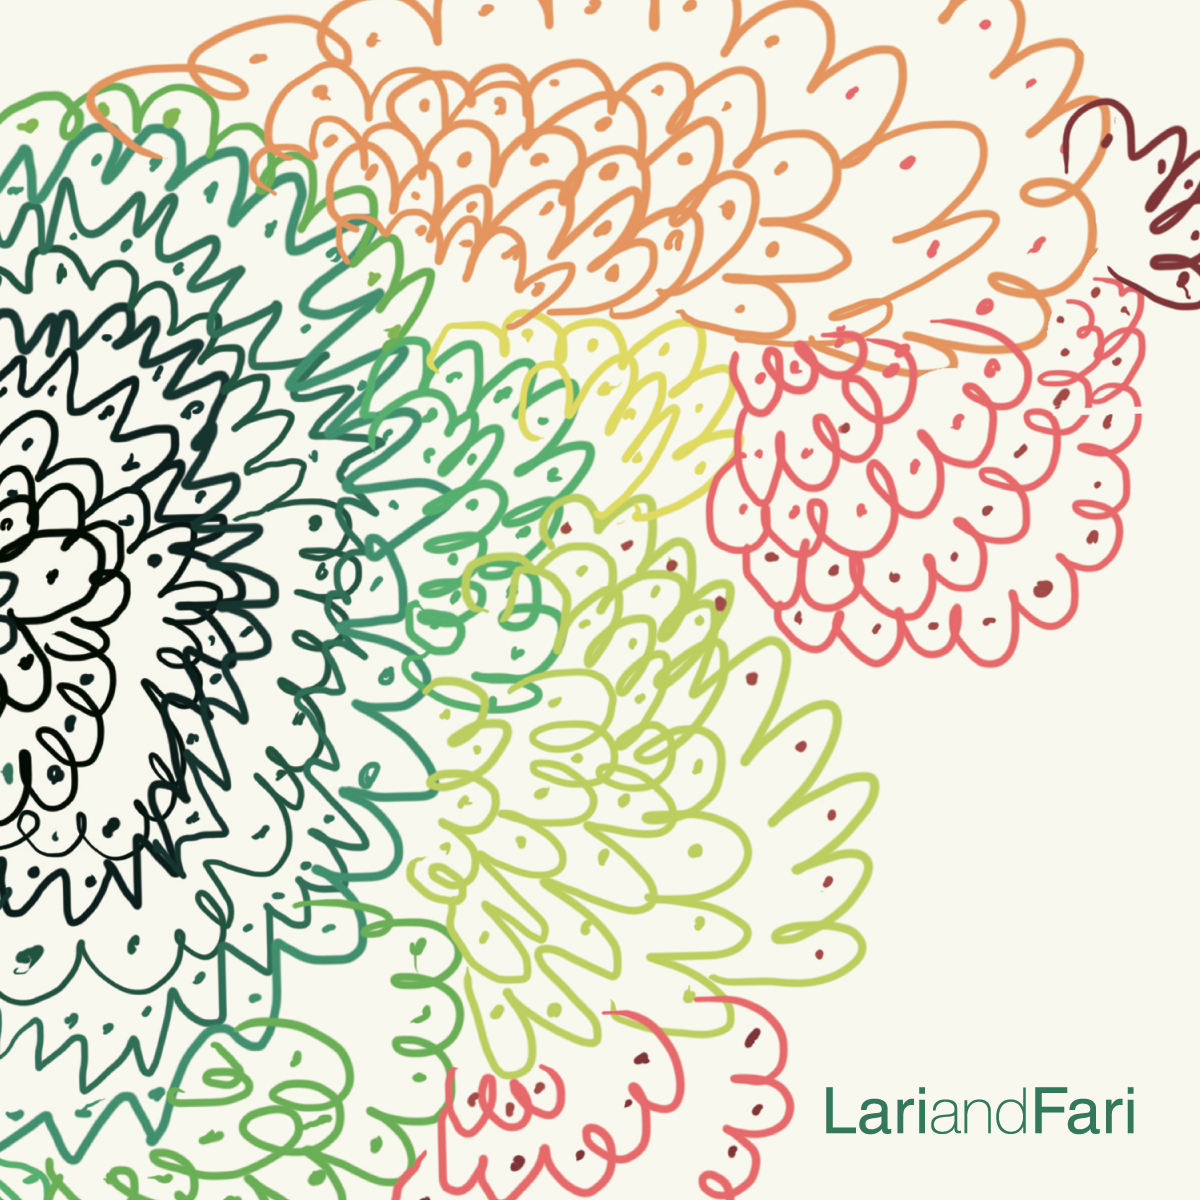 Lari and Fari – Lari and Fari